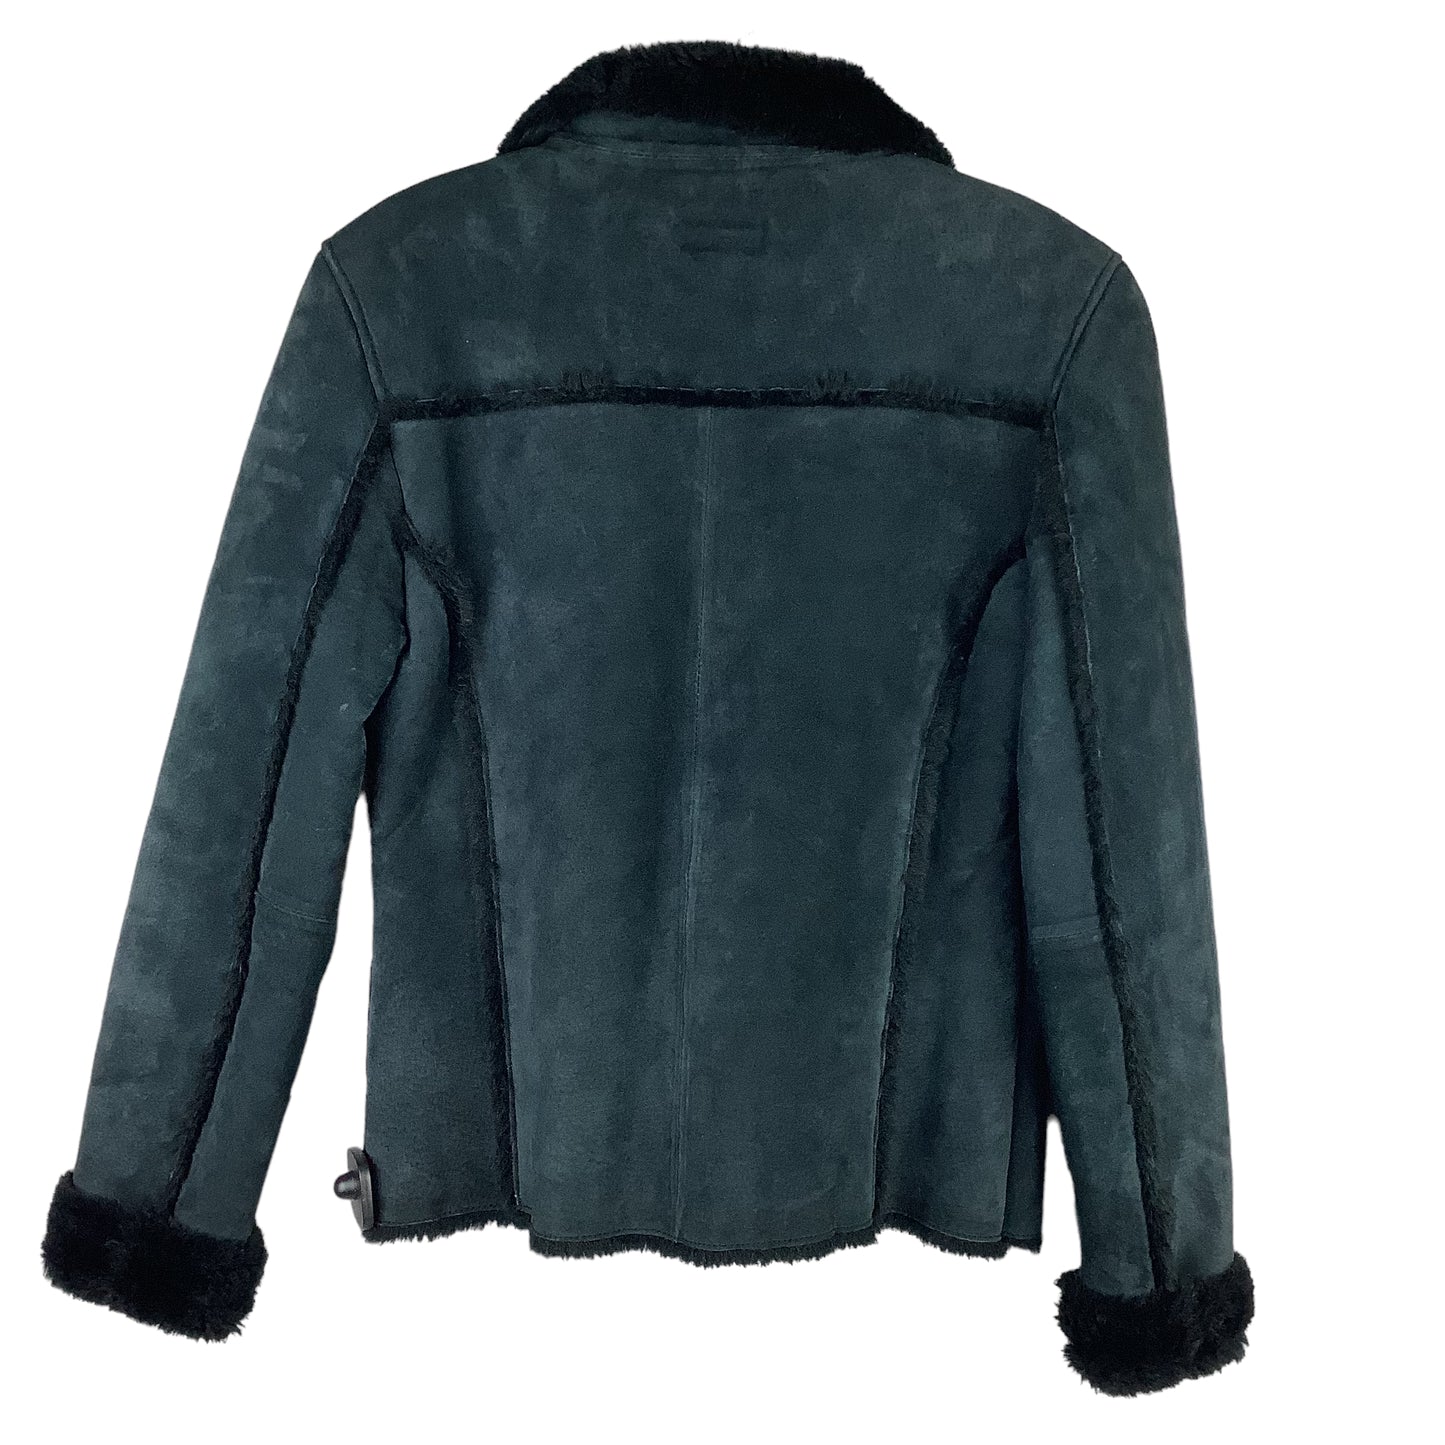 Jacket Leather By Aldo  Size: S